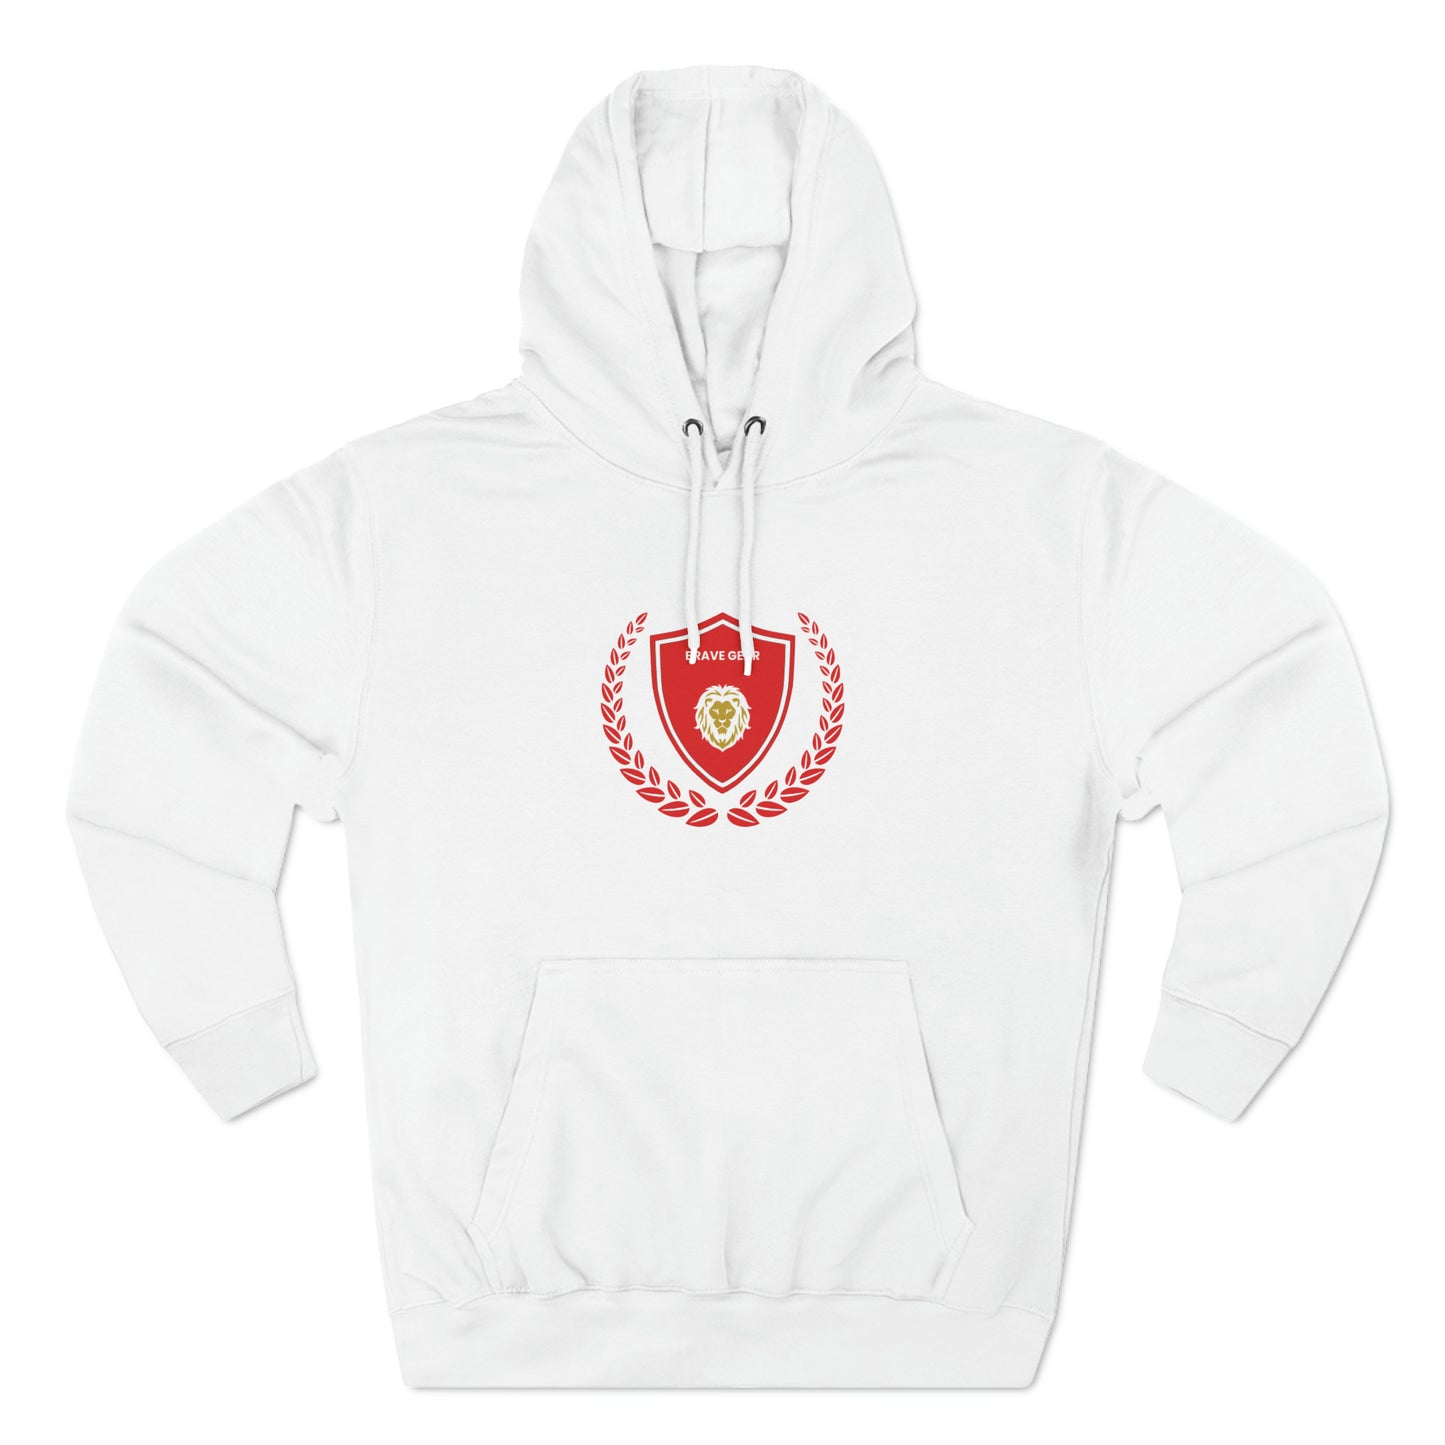 BG "Football Club logo" Premium Pullover Hoodie